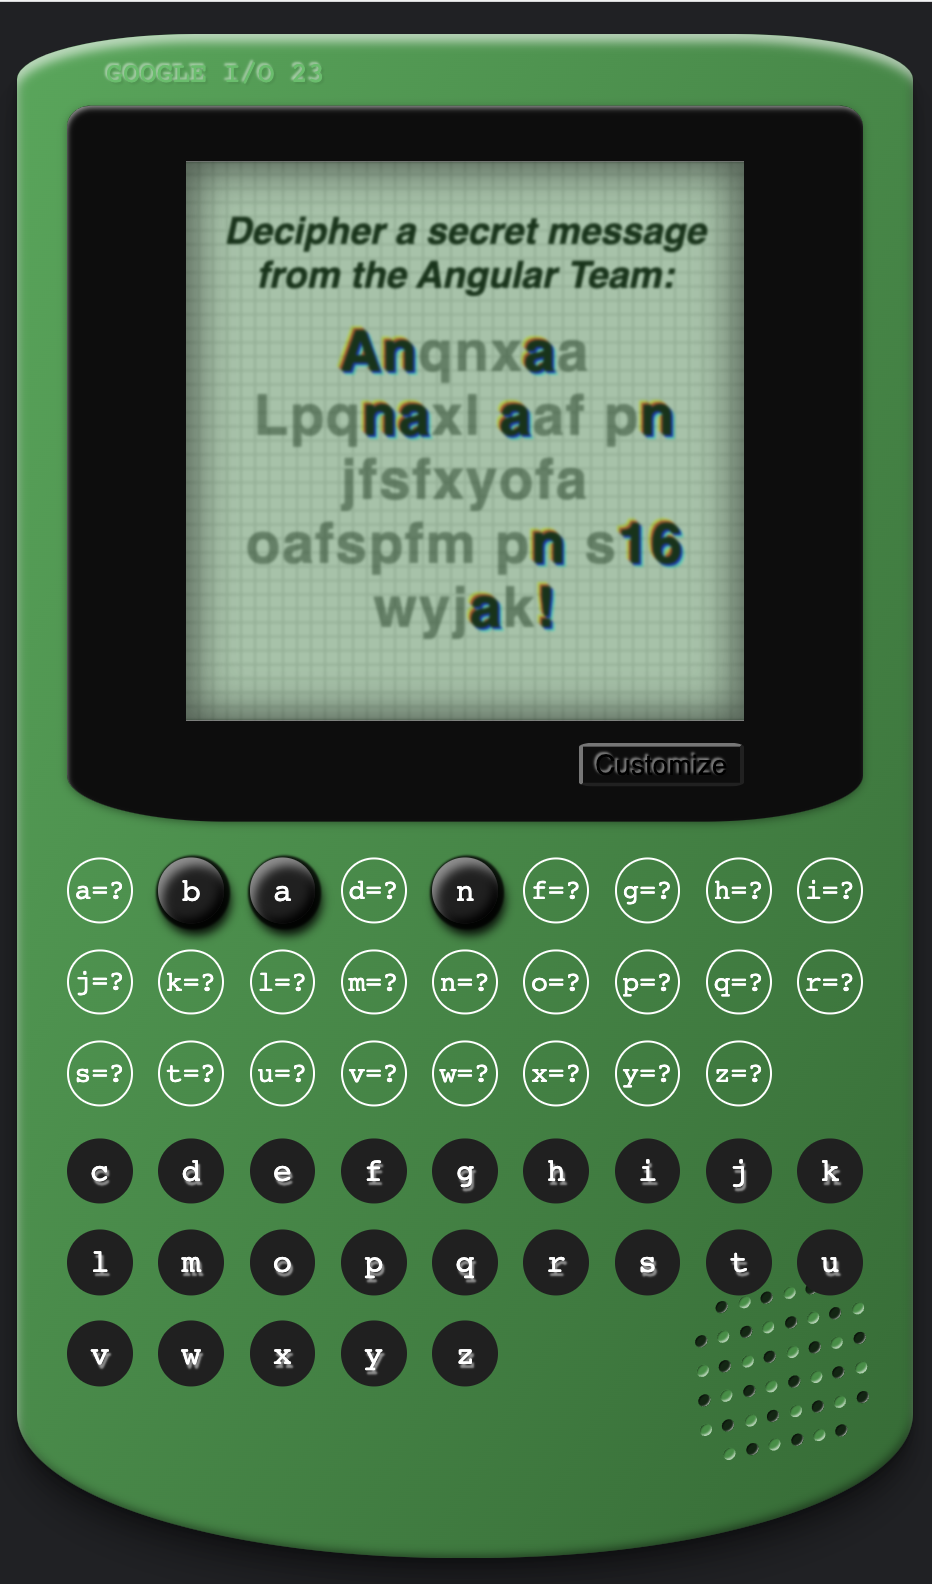 Yeşil klasik oyun konsolu tarzında Angular Cypher oyunu ve ekranda &quot;Anqnxaa Lpcnaxl aaf pn jfafxyofa aofapfm pn a16 wyjak!&quot; ekranı gizli bir mesaj görünüyor.